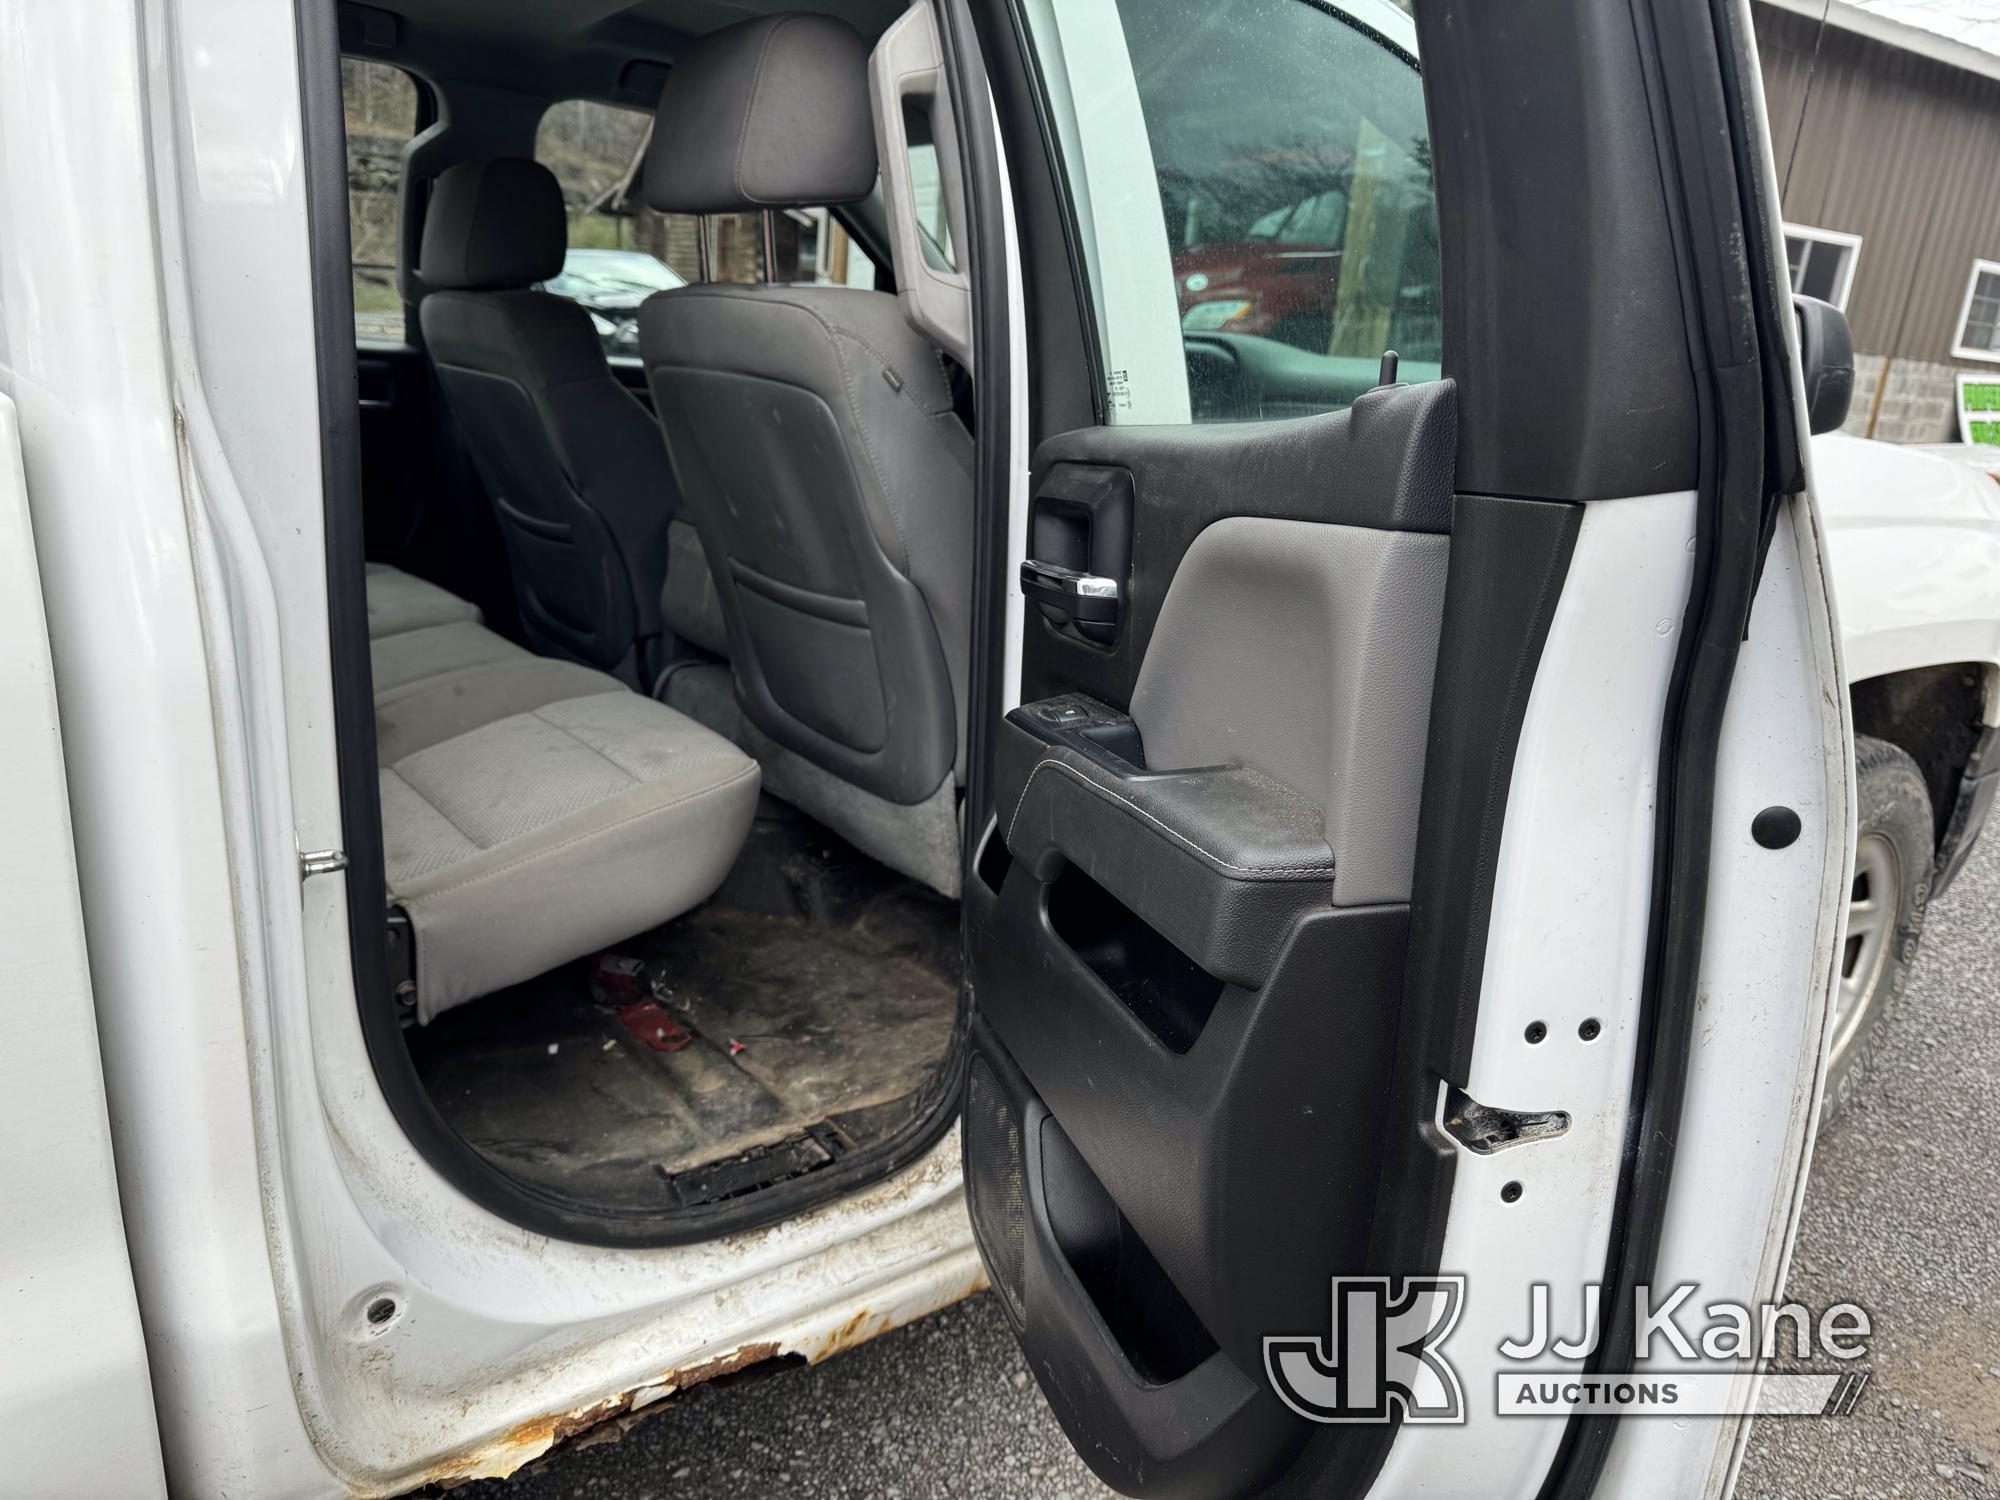 (Hanover, WV) 2015 Chevrolet Silverado 1500 4x4 Extended-Cab Pickup Truck Runs & Does Not Move) (Min